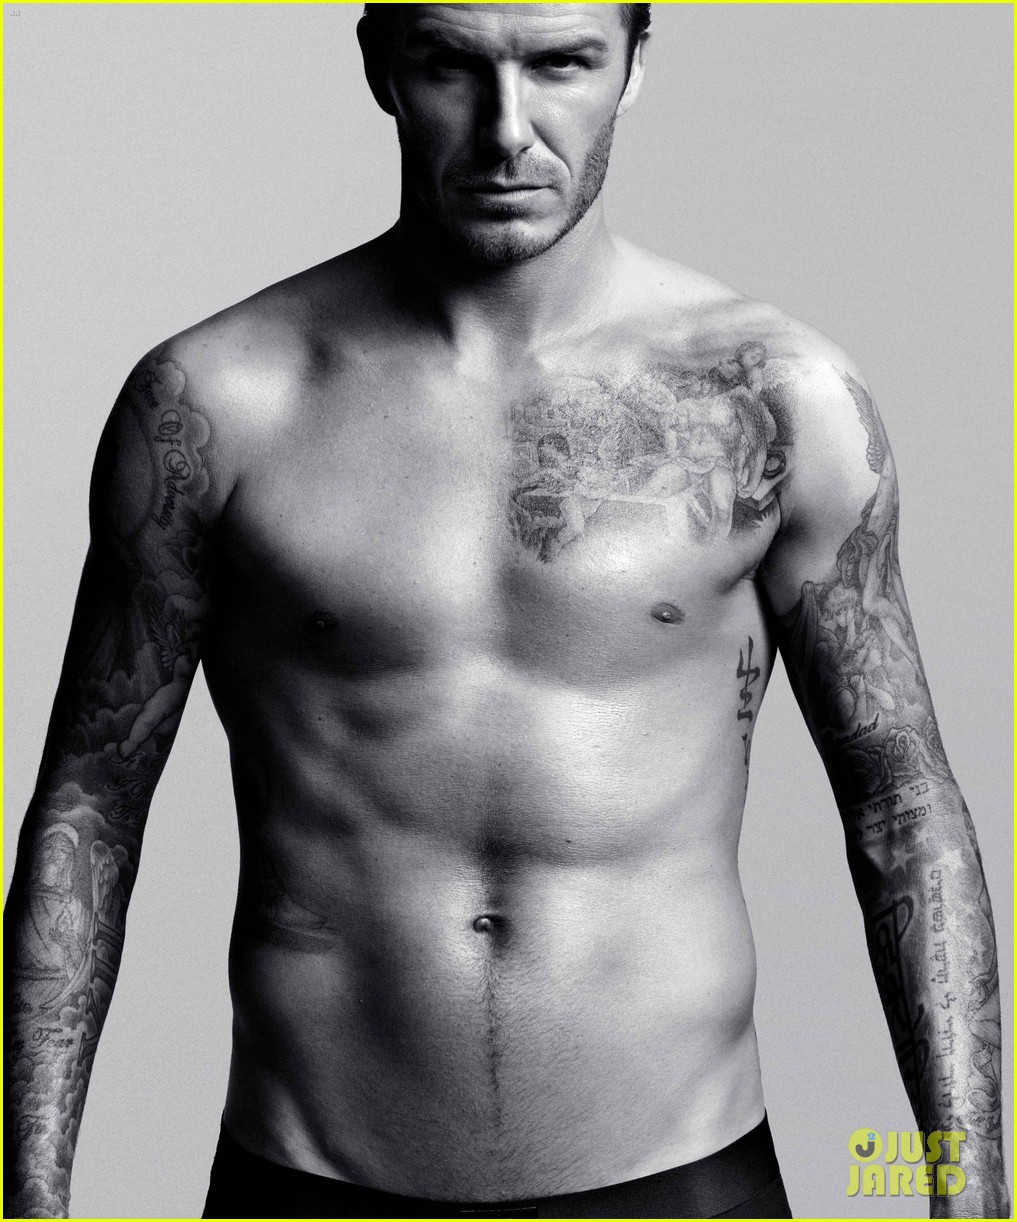 David Beckham Underwear Ads For Handm Revealed David Beckham Photo 28044369 Fanpop